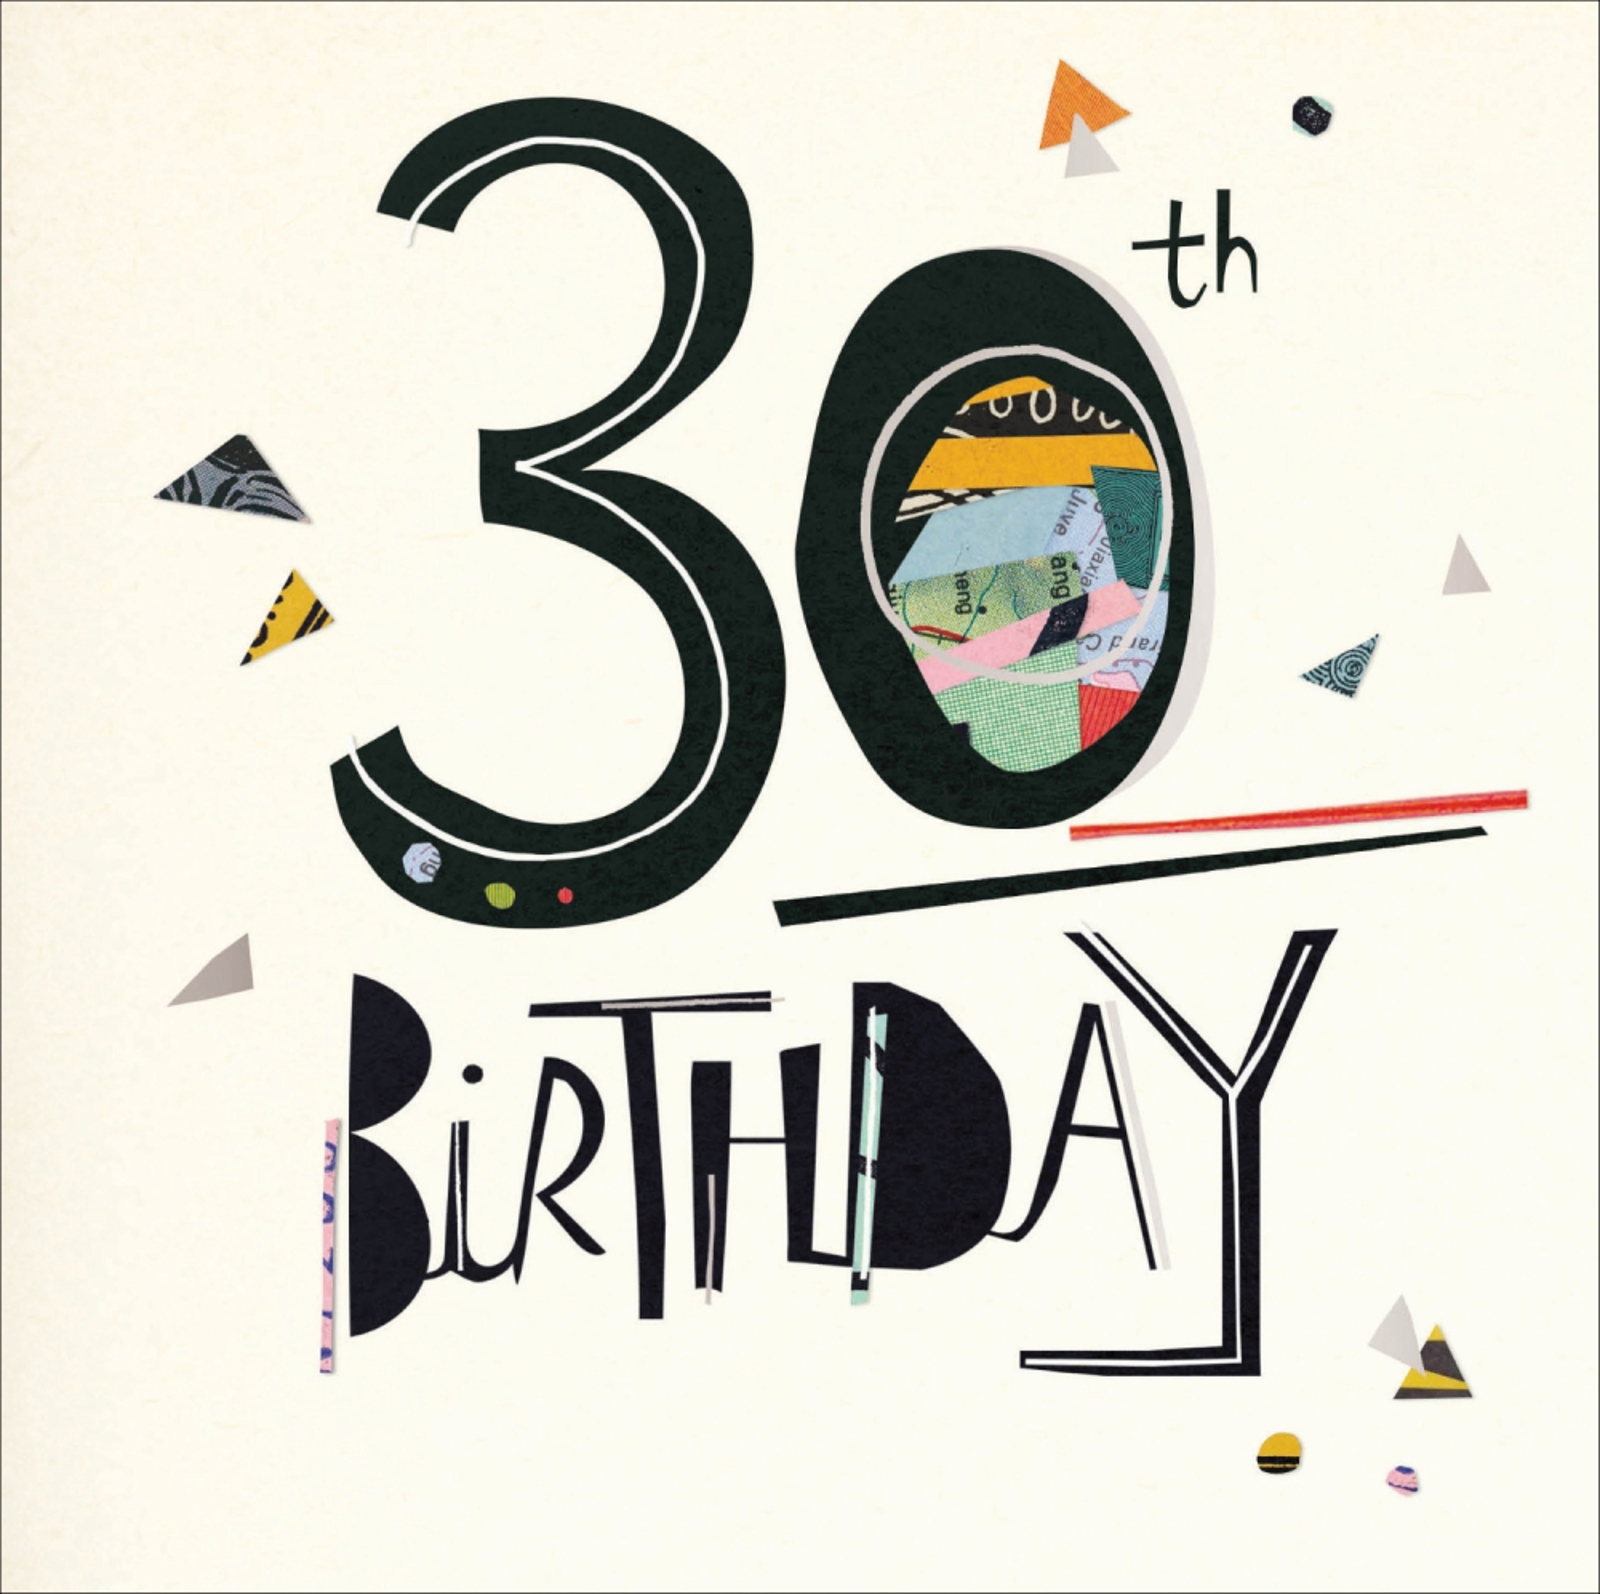 30th Birthday Card 466588 - Zest Gifts Crowborough